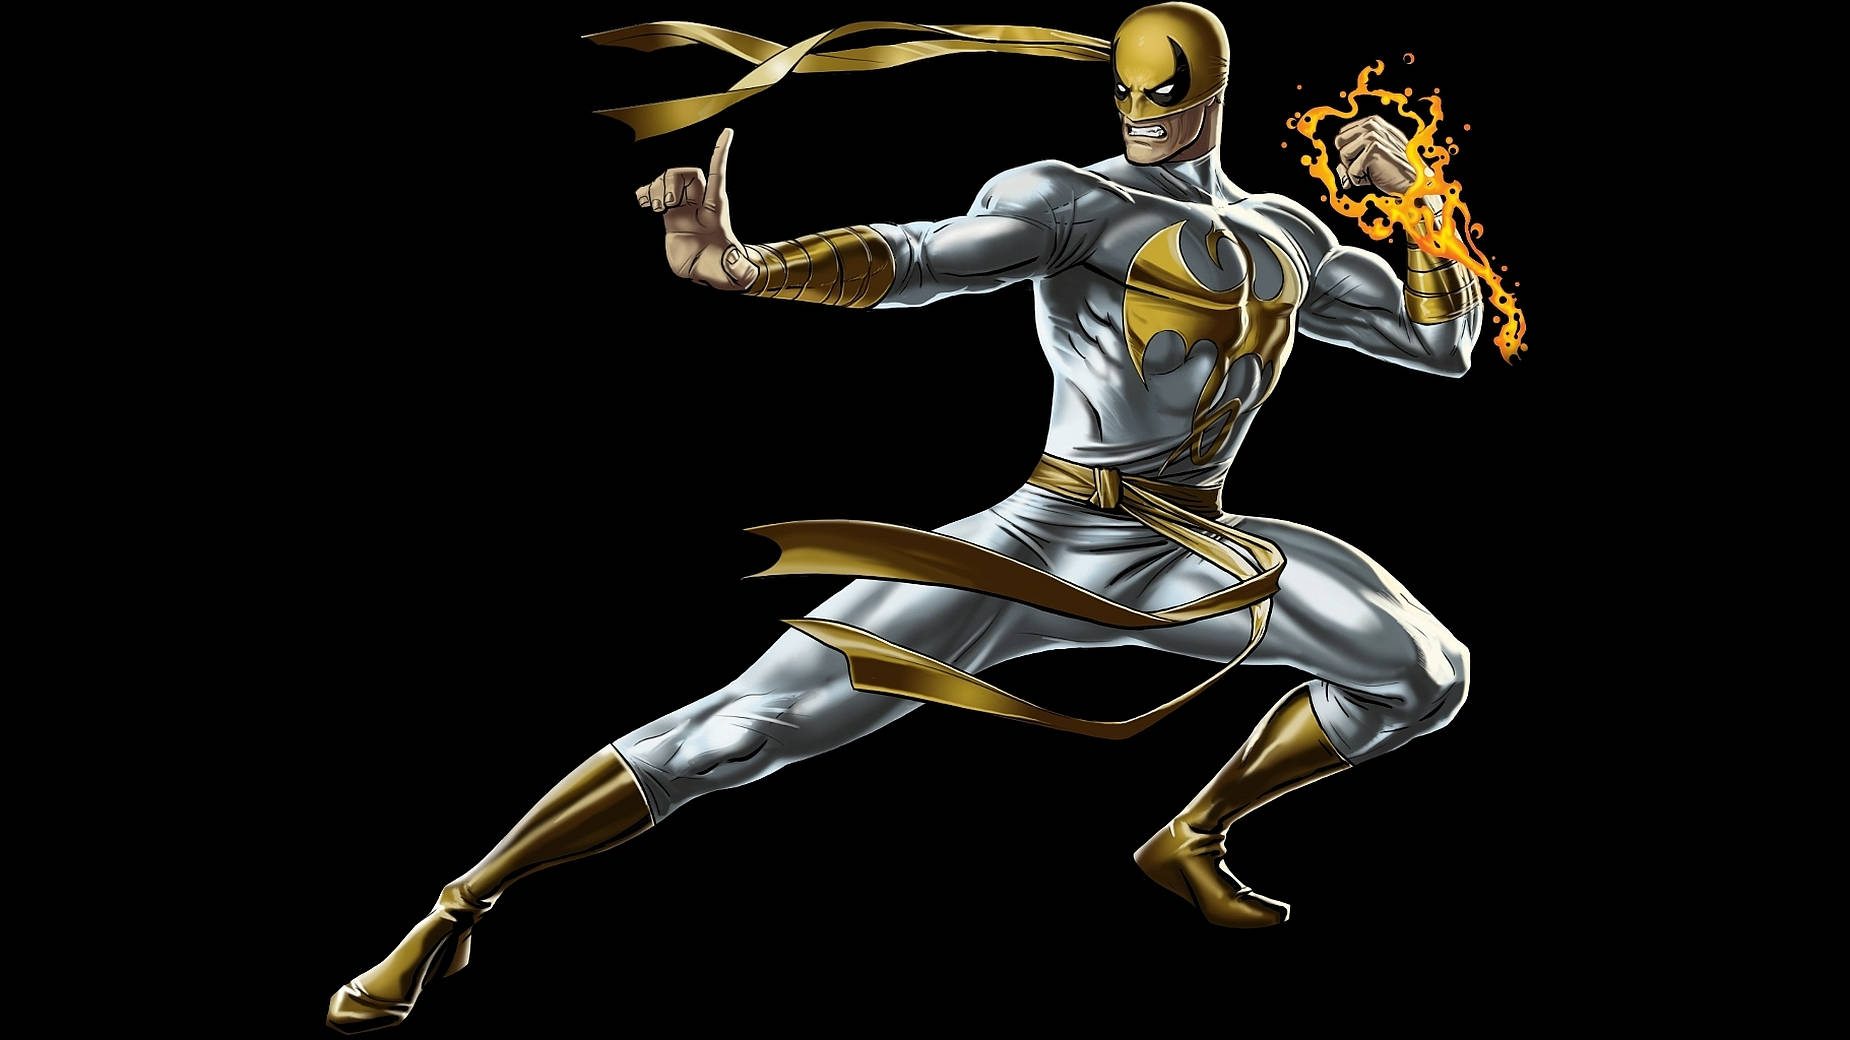 Iron Fist Superhero Power Pose Wallpaper